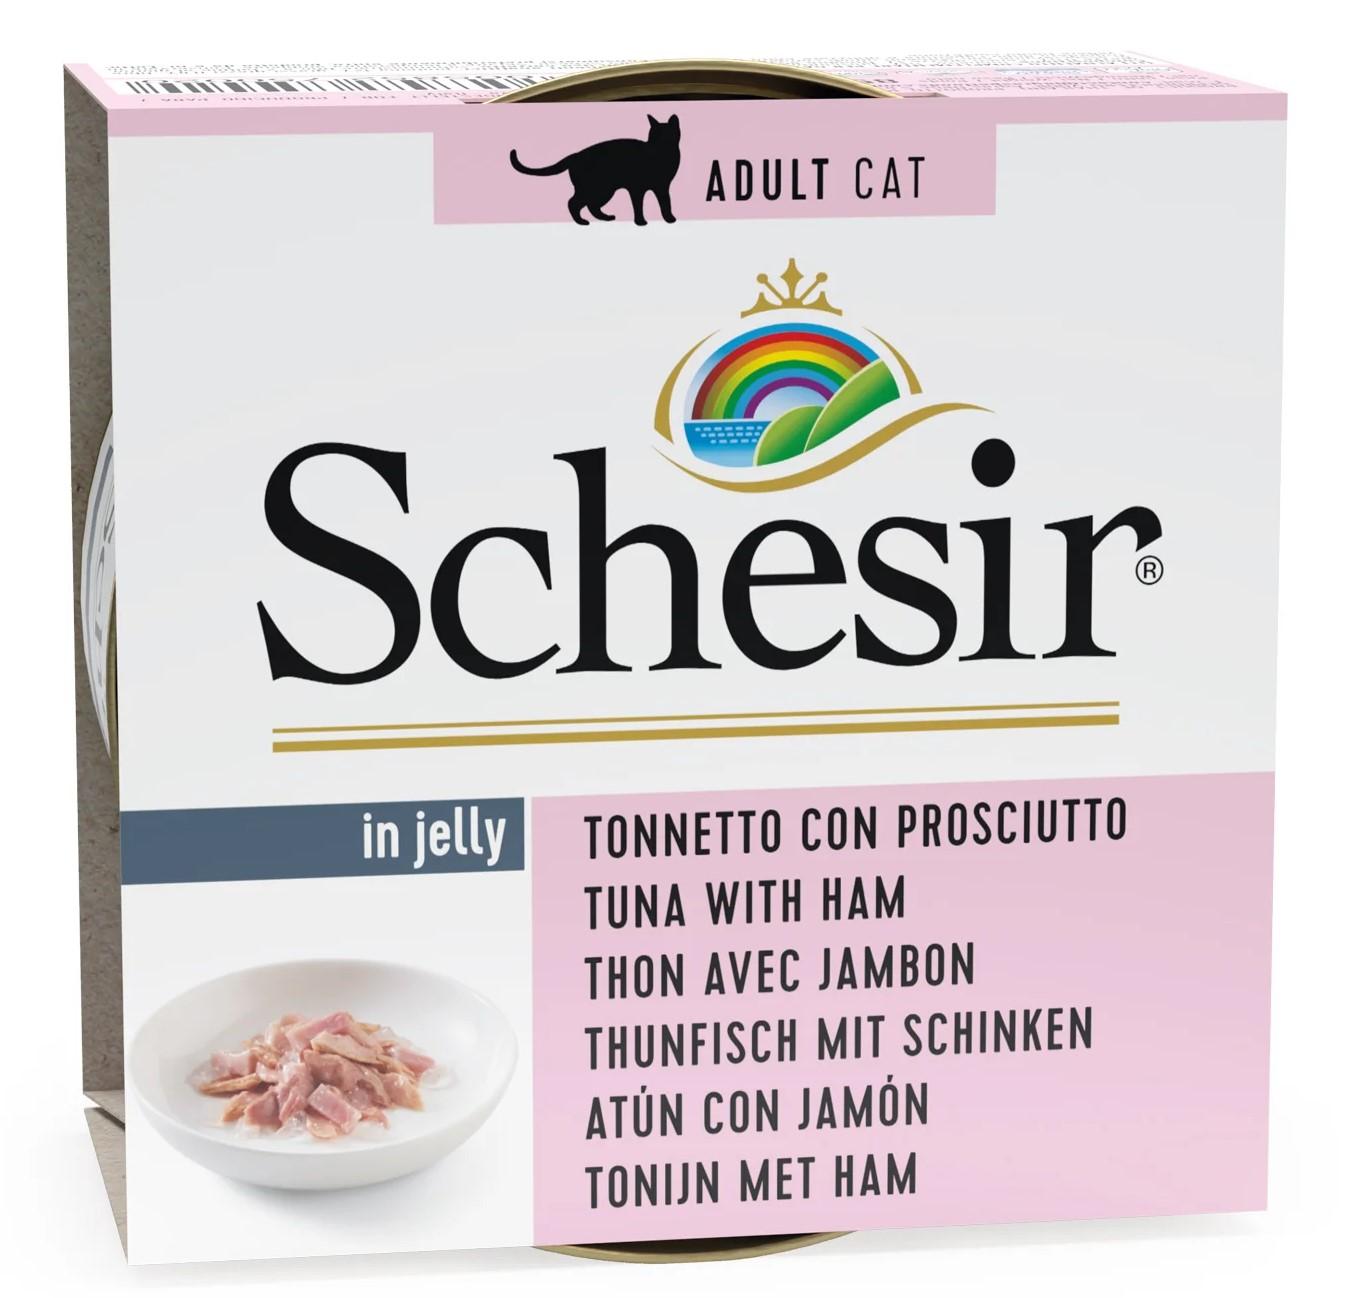 Schesir Tuna With Ham in jelly